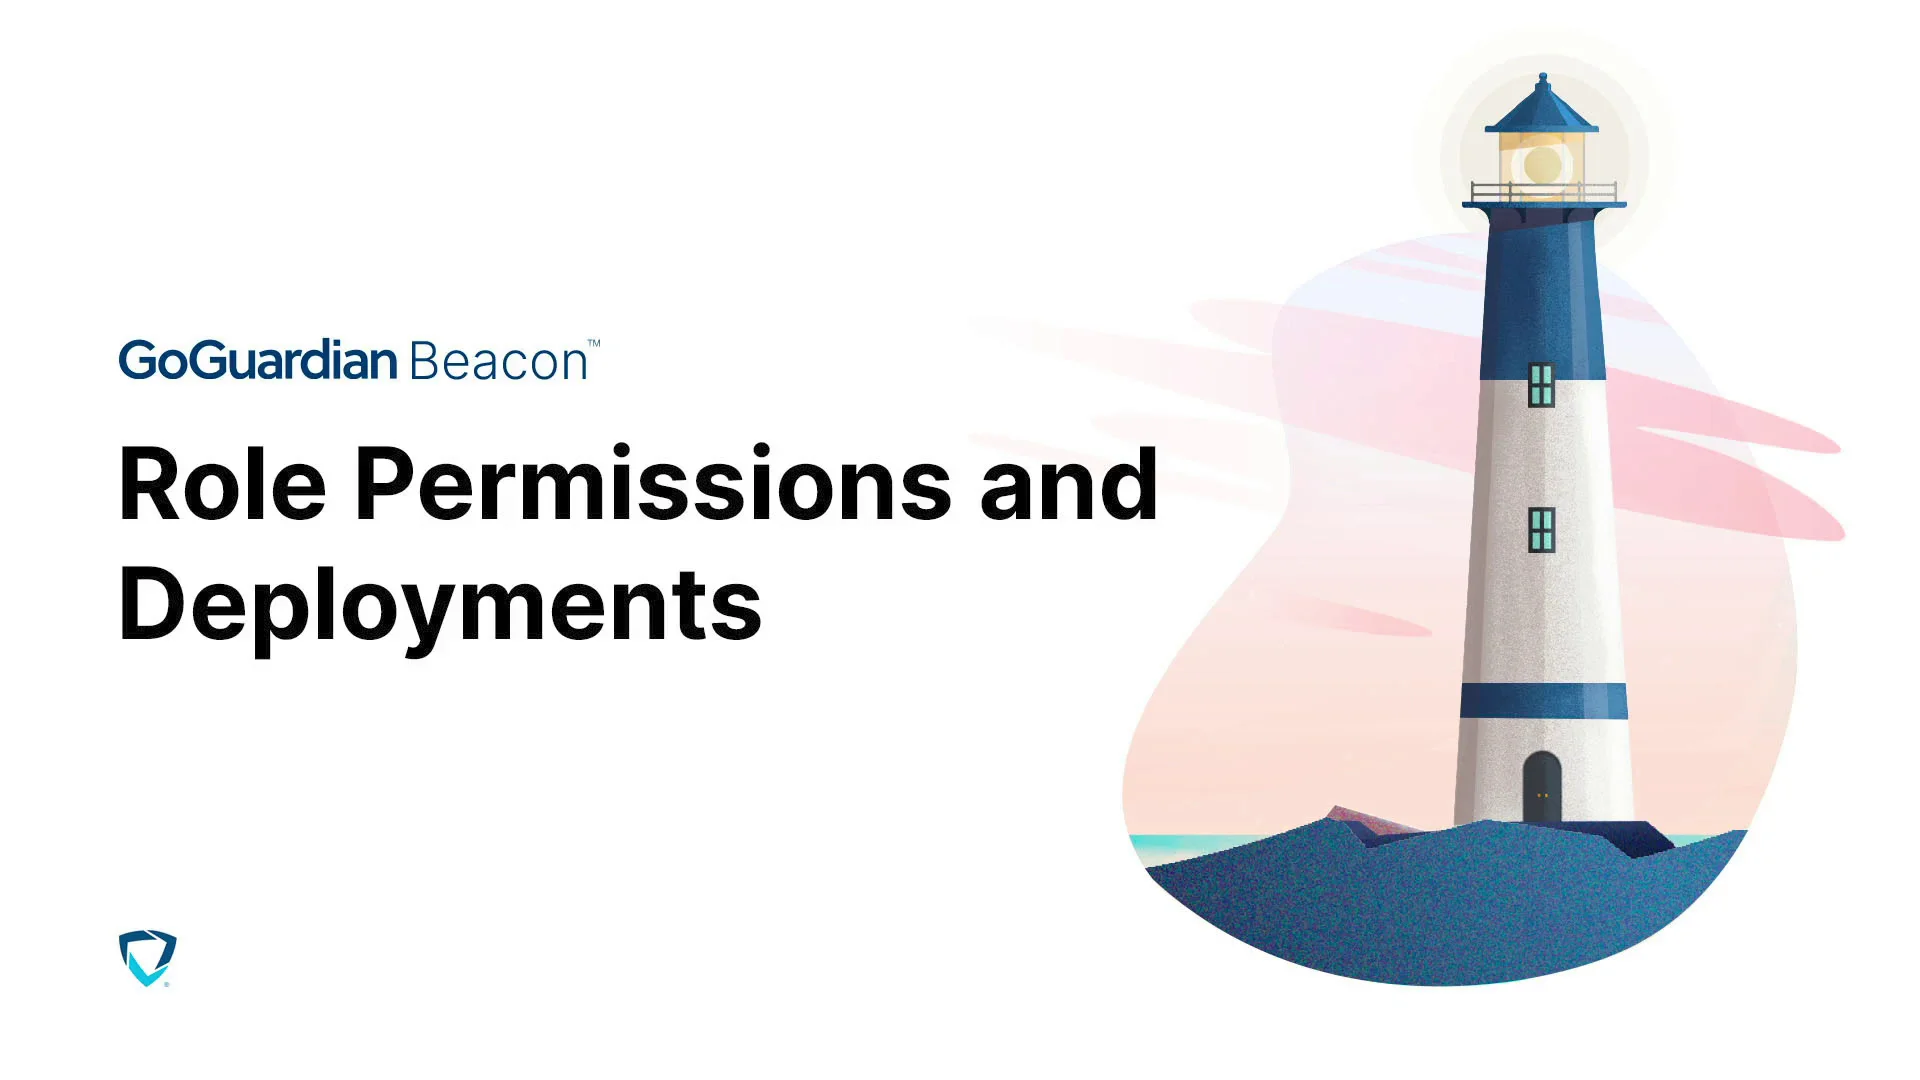 Creating Beacon Deployments